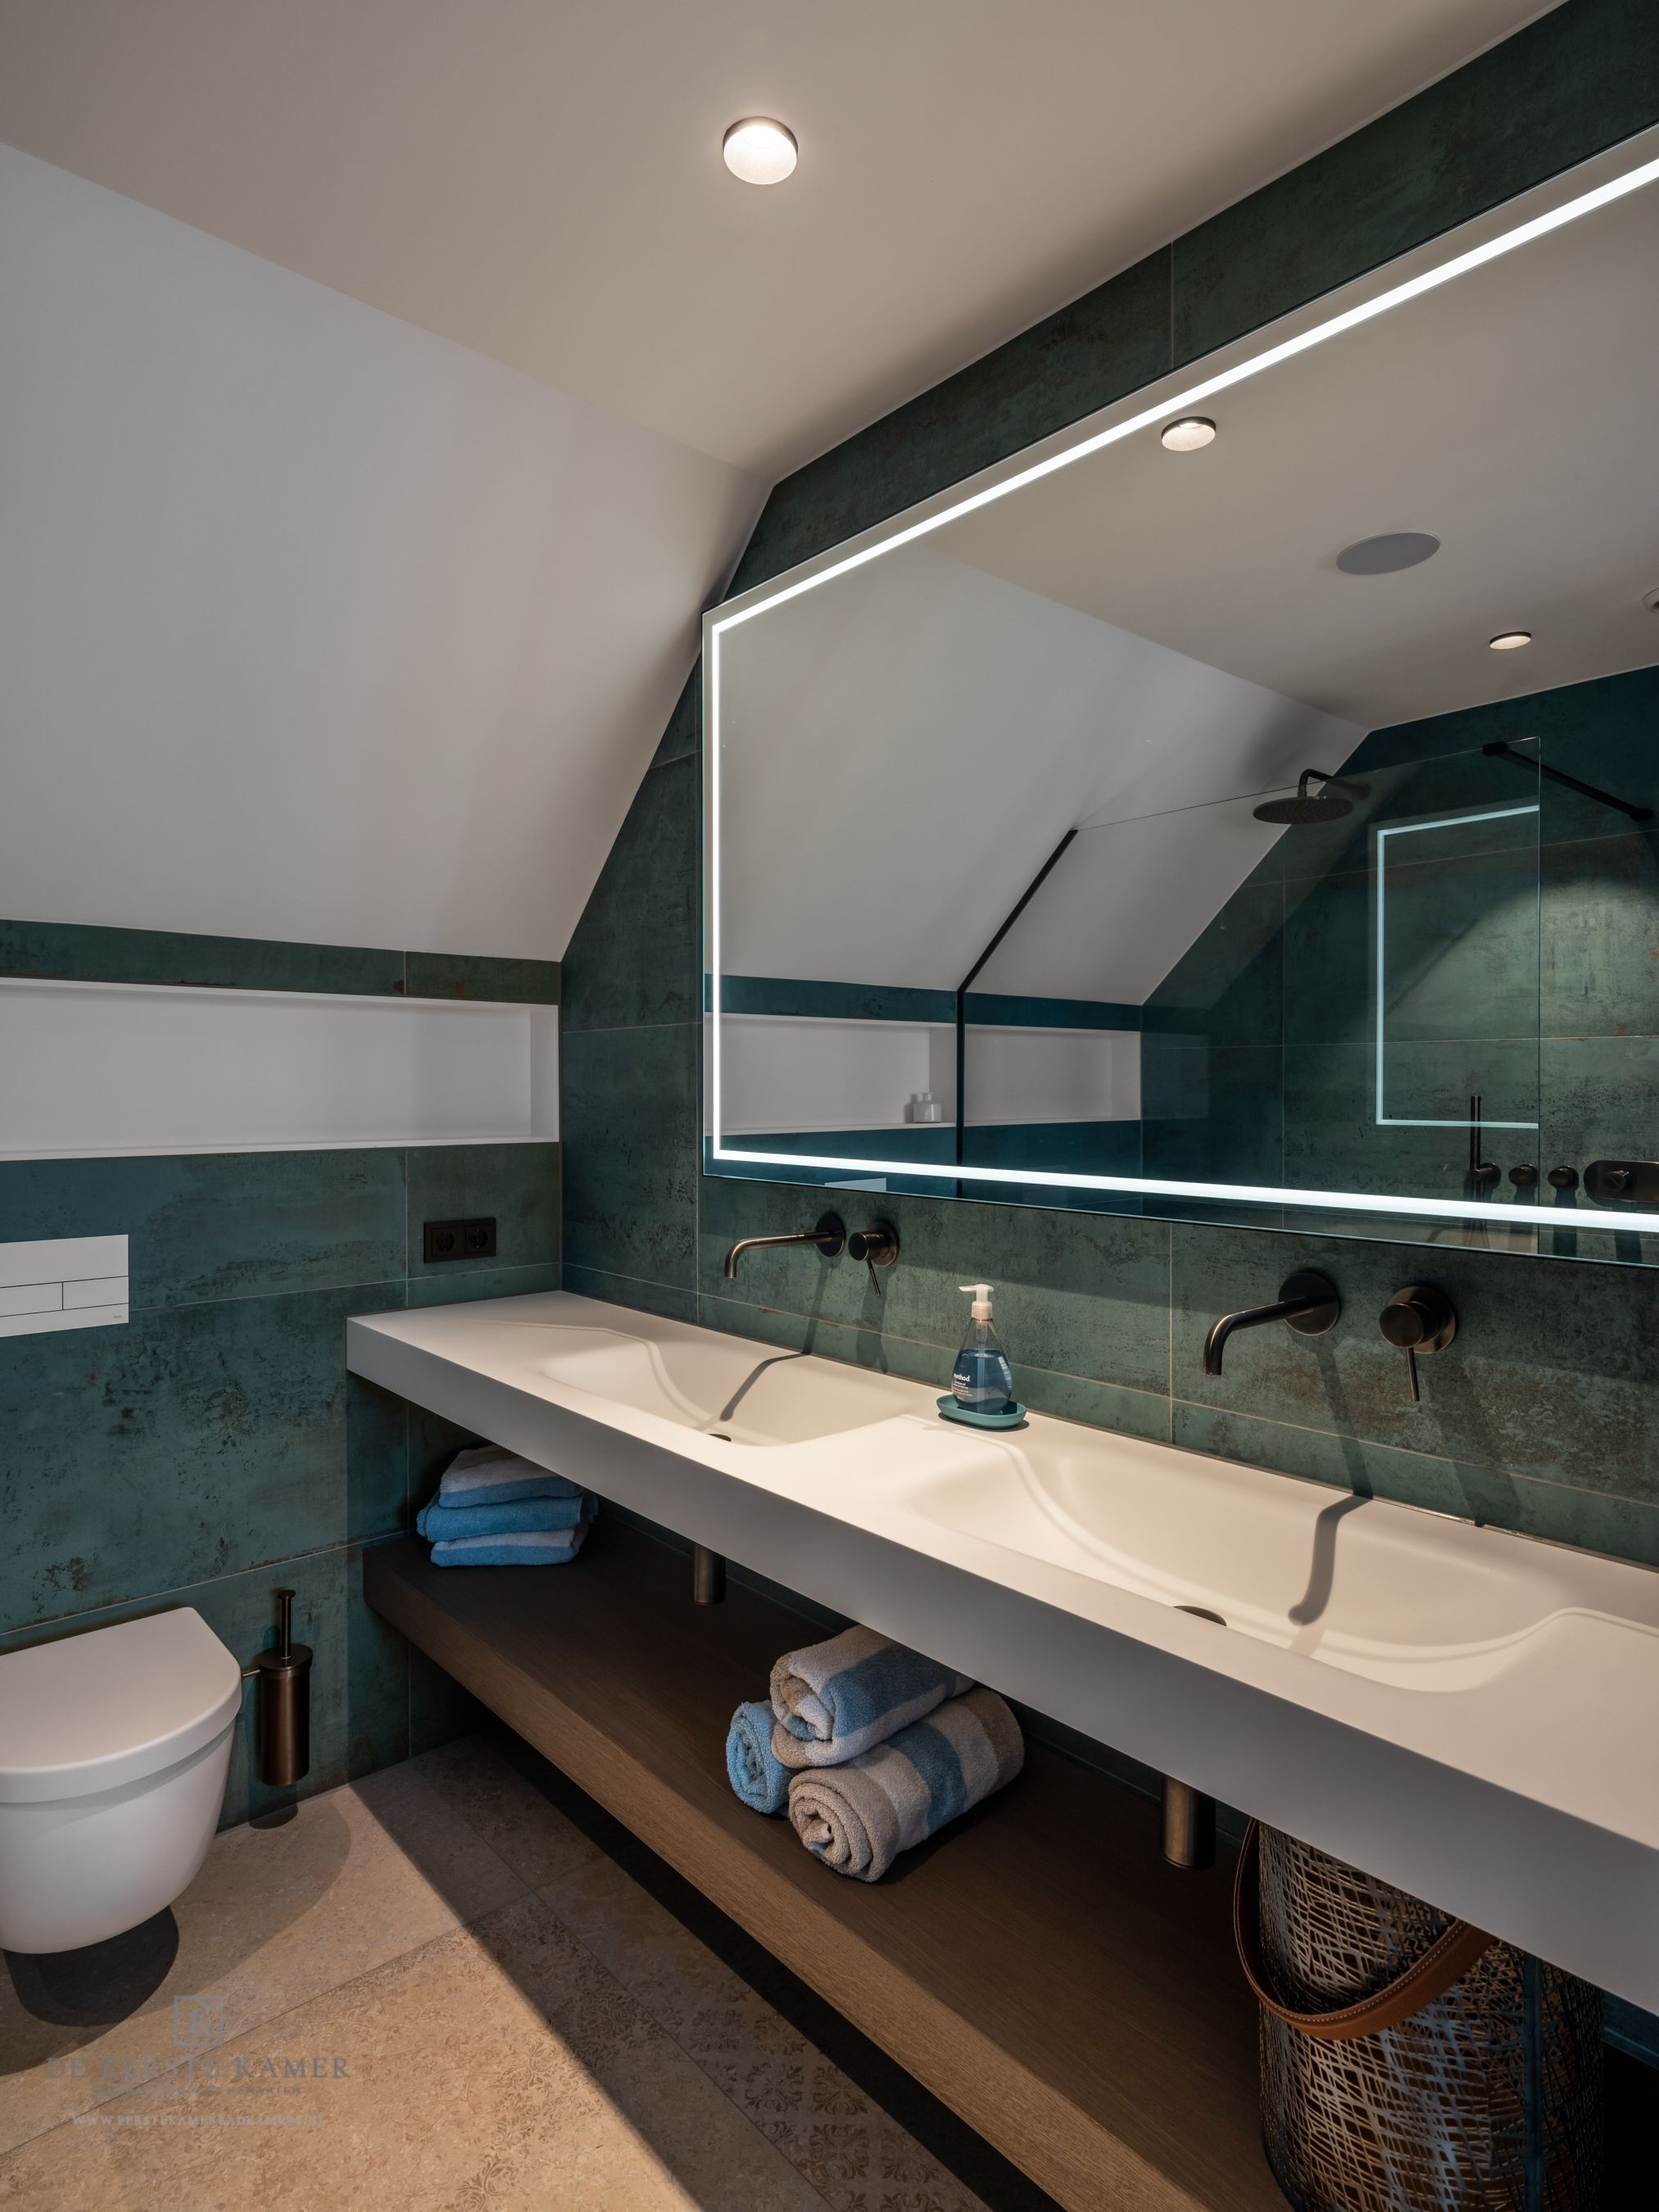 Foto: Gastenbadkamer  groene tegels  zwarte kranen en verlichte spiegel